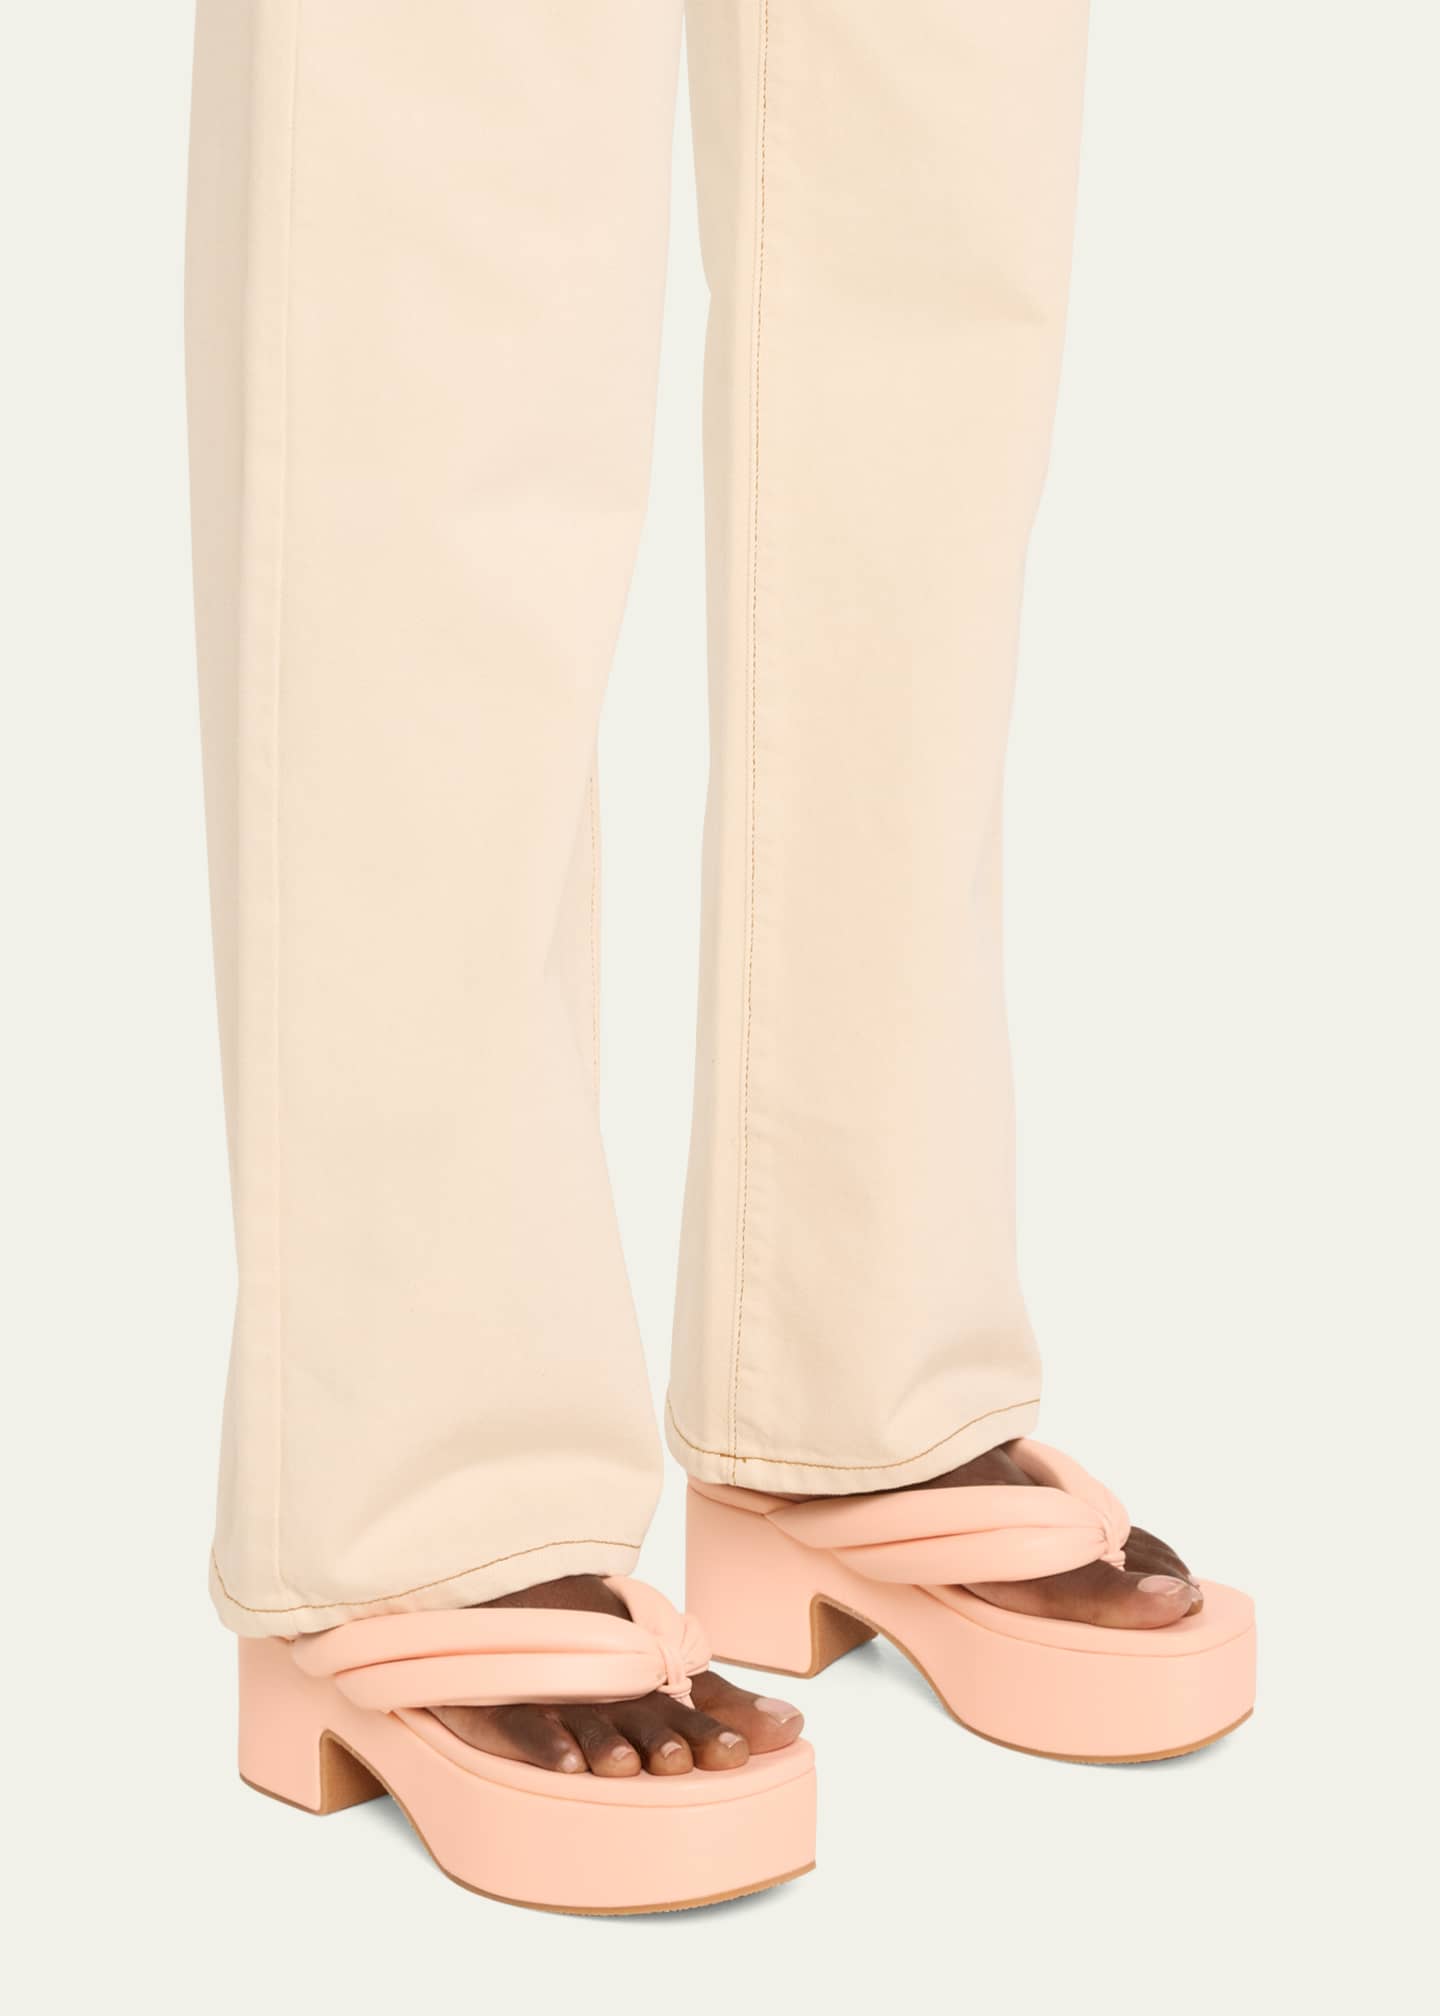 Dries Van Noten Padded Leather Thong Platform Sandals, Blush, Women's, 9.5b / 39.5EU, Sandals Thongs & Flip Flops